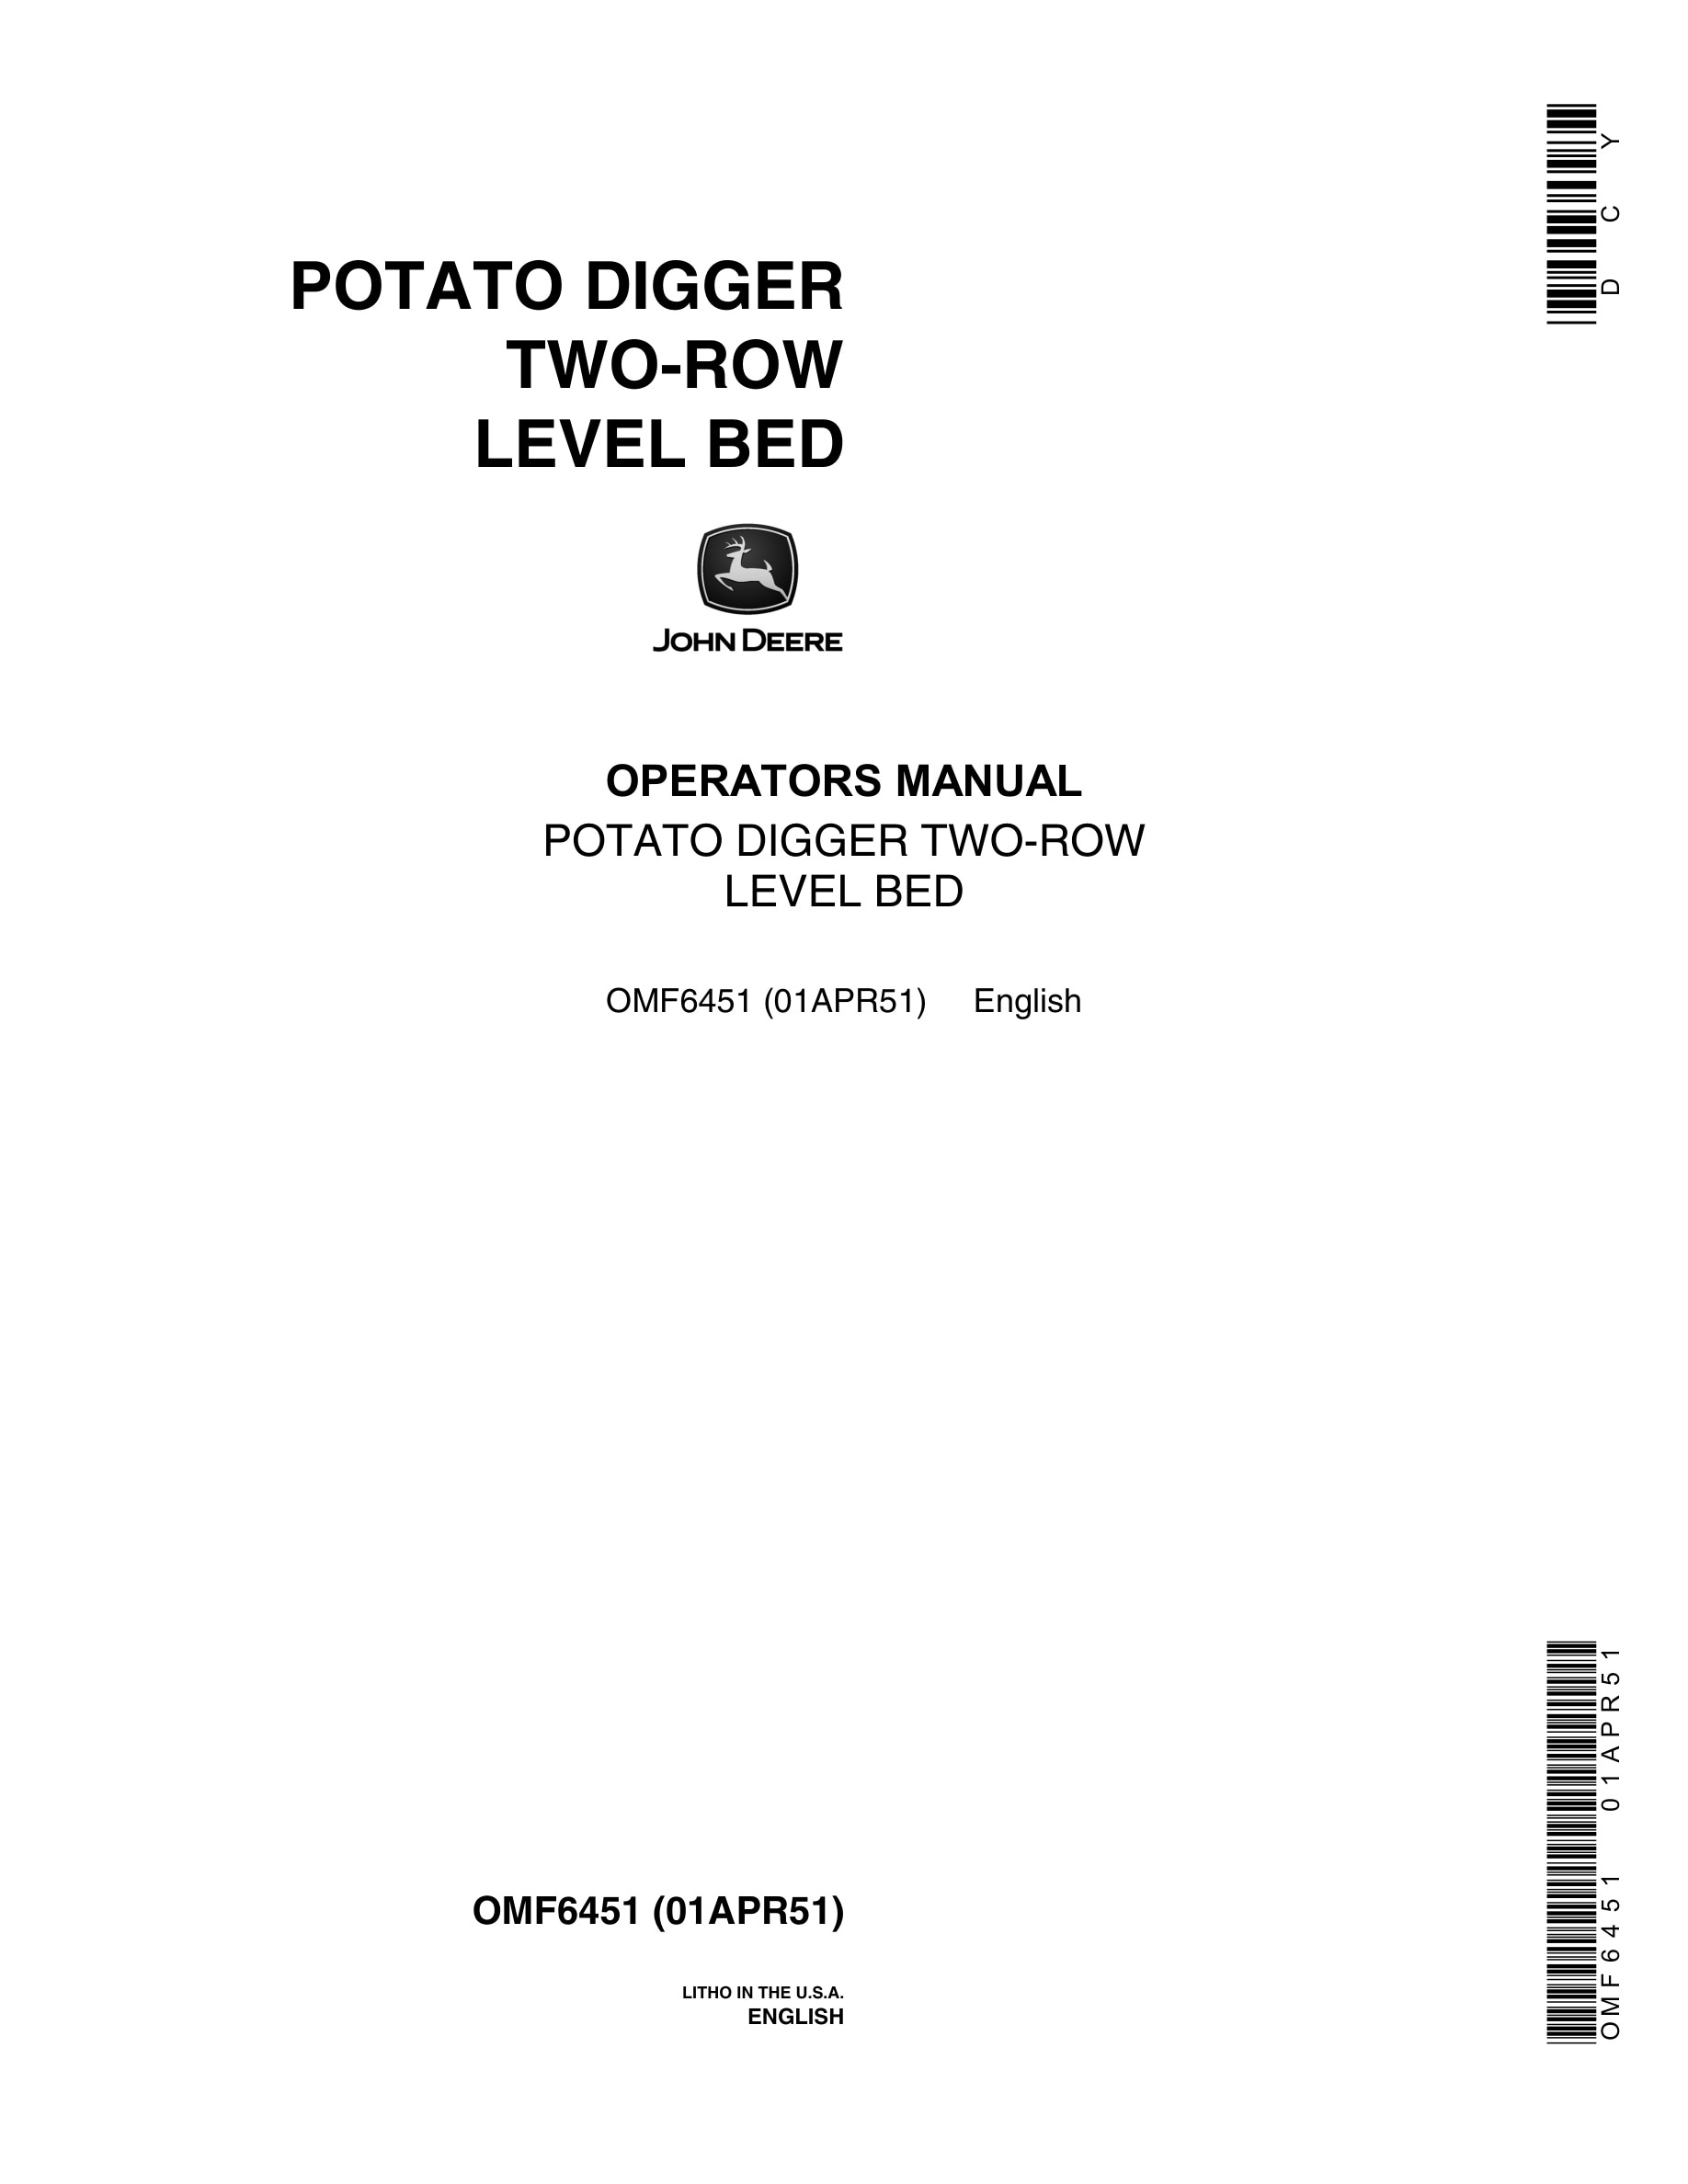 John Deere POTATO DIGGER TWO-ROW LEVEL BED Operator Manual OMF6451-1